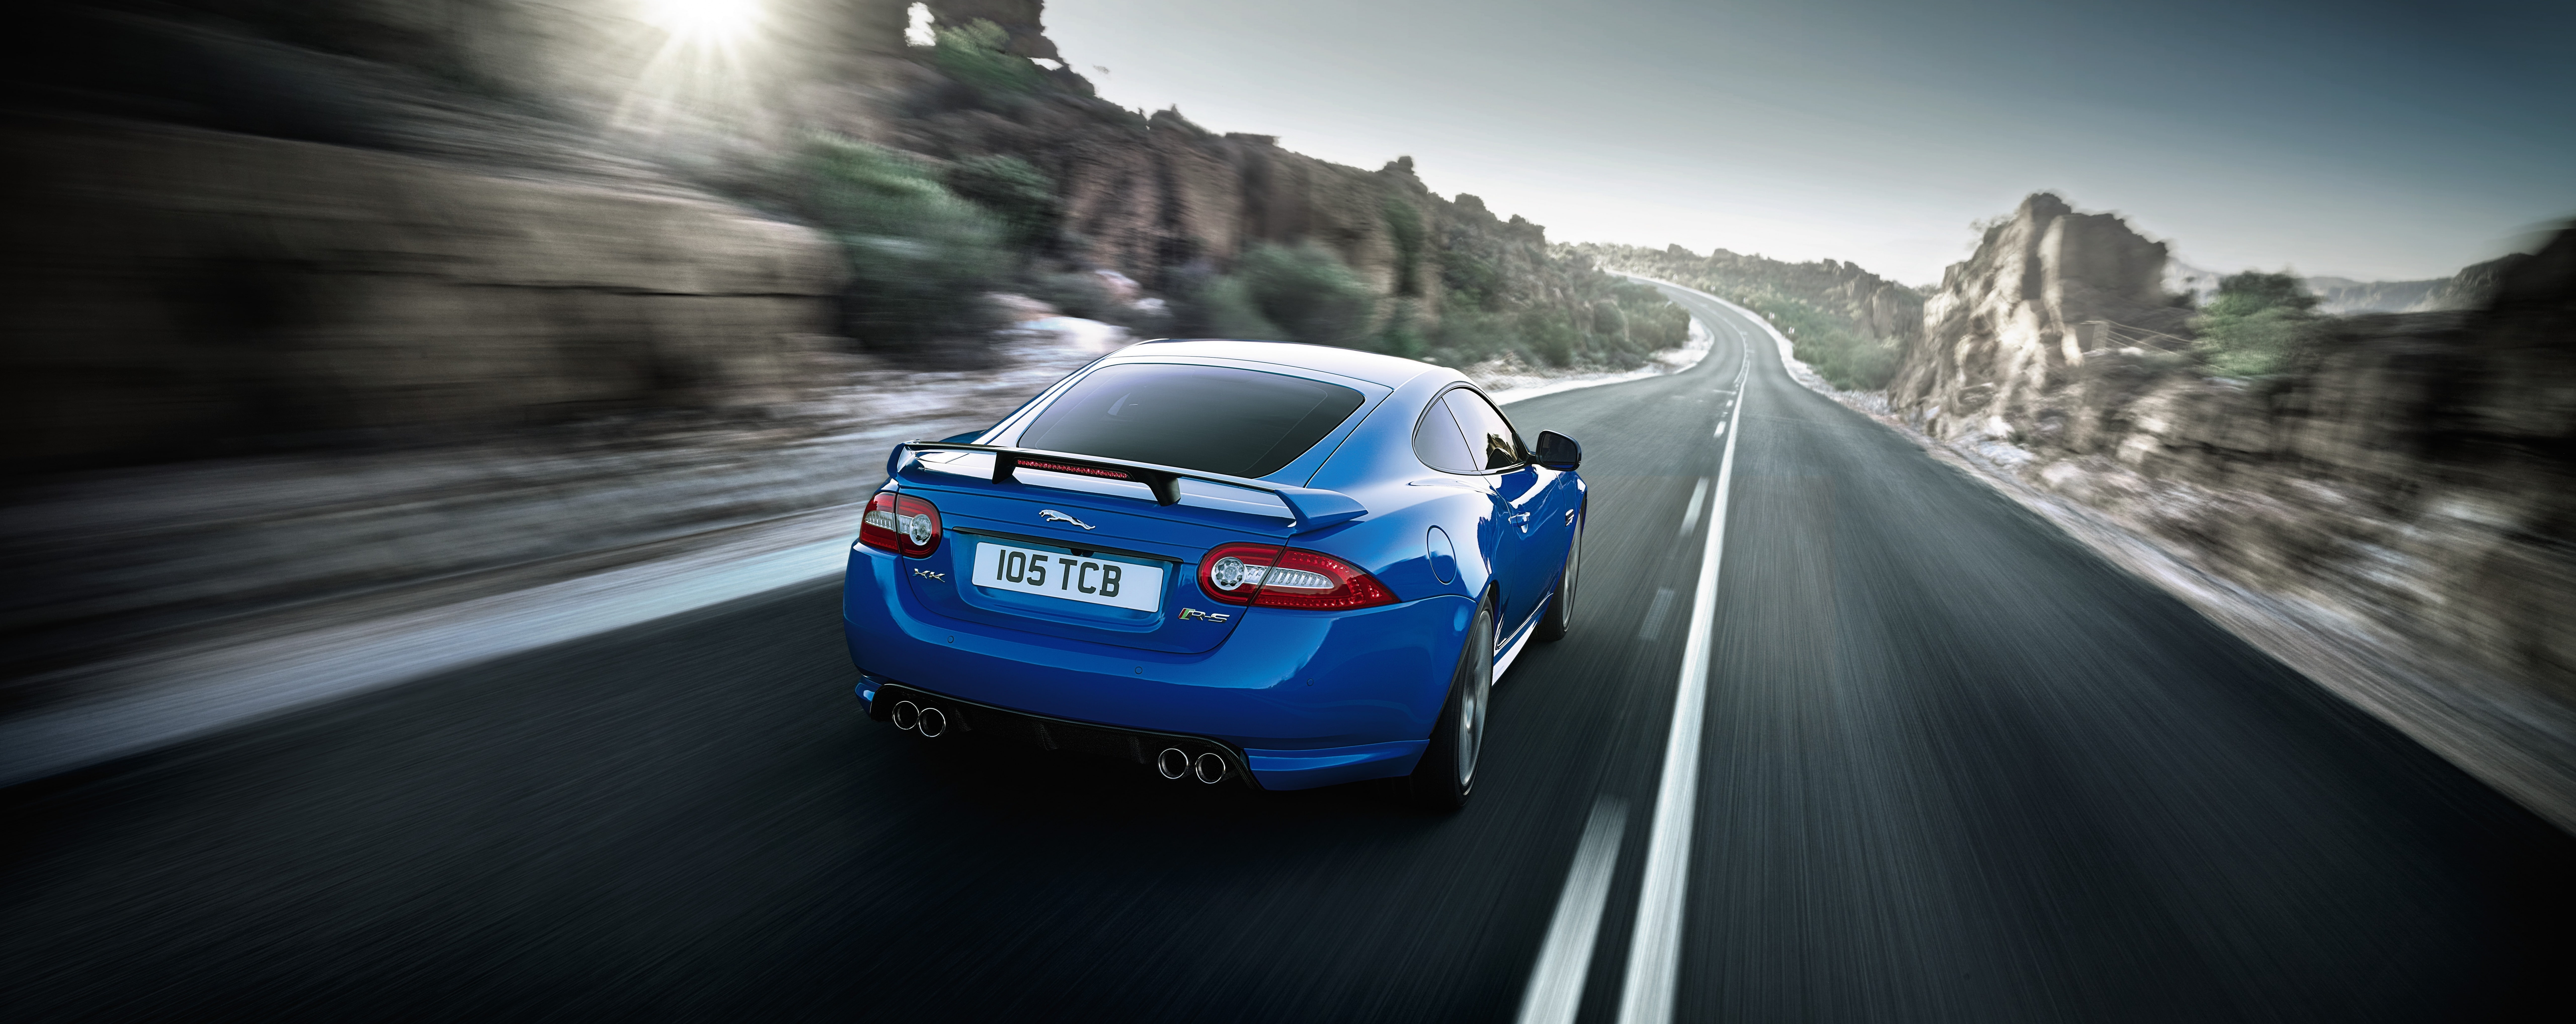 Jaguar XKR S Blue, blue sedan, Cars, motion, blurred motion, speed